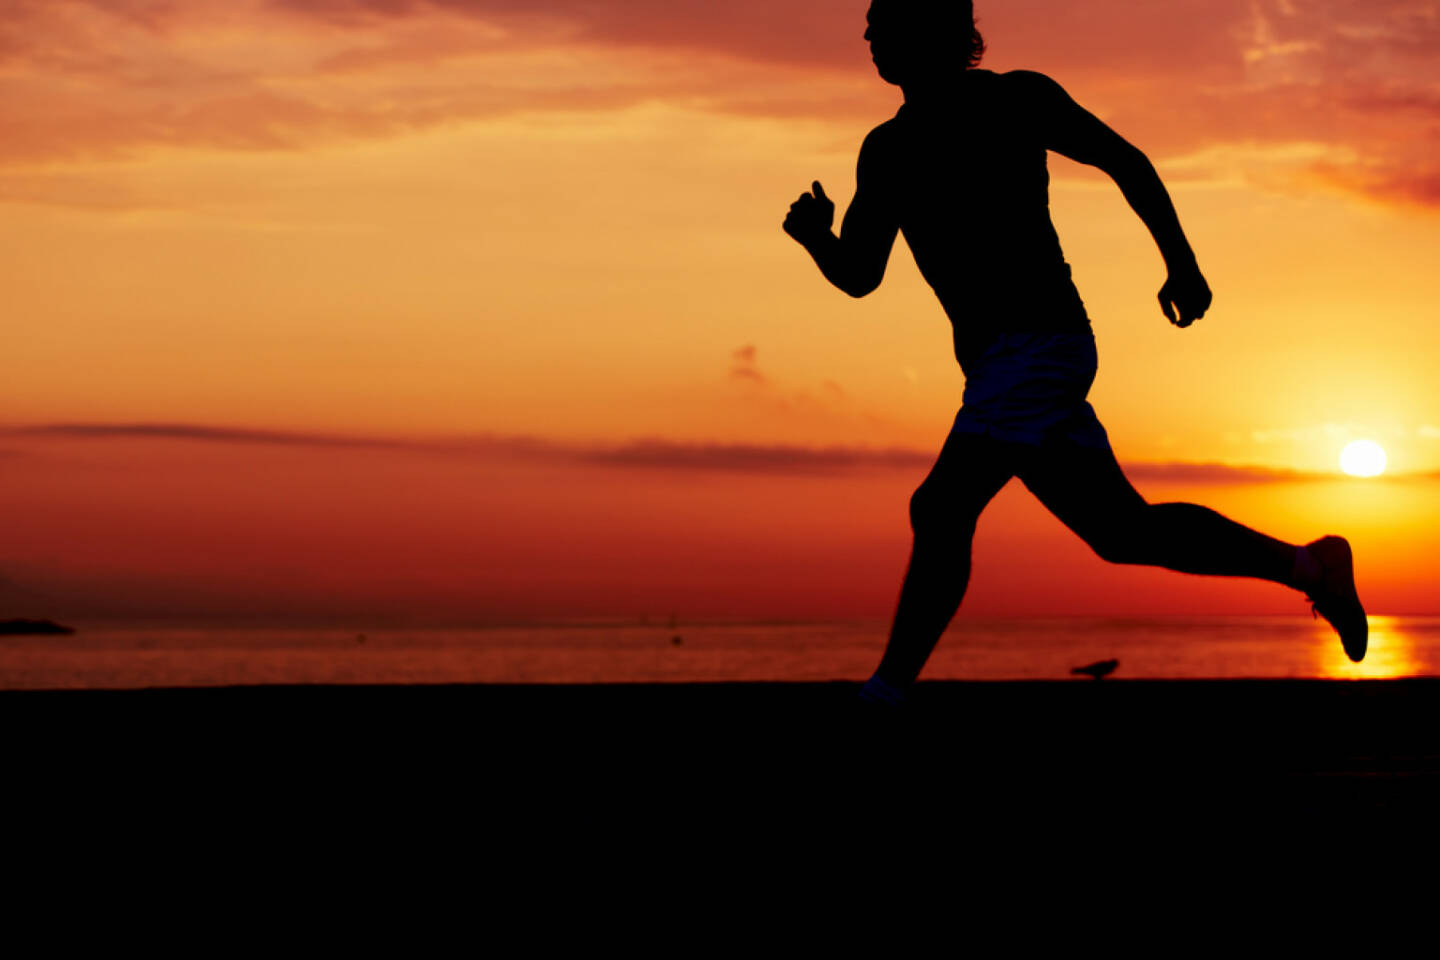 Laufen, Läufer, Sonnenuntergang, Sonnenaufgang, Strand, Meer, http://www.shutterstock.com/de/pic-224342326/stock-photo-silhouette-of-athletic-runner-jogging-on-the-beach-against-orange-sunrise-male-jogger-with.html